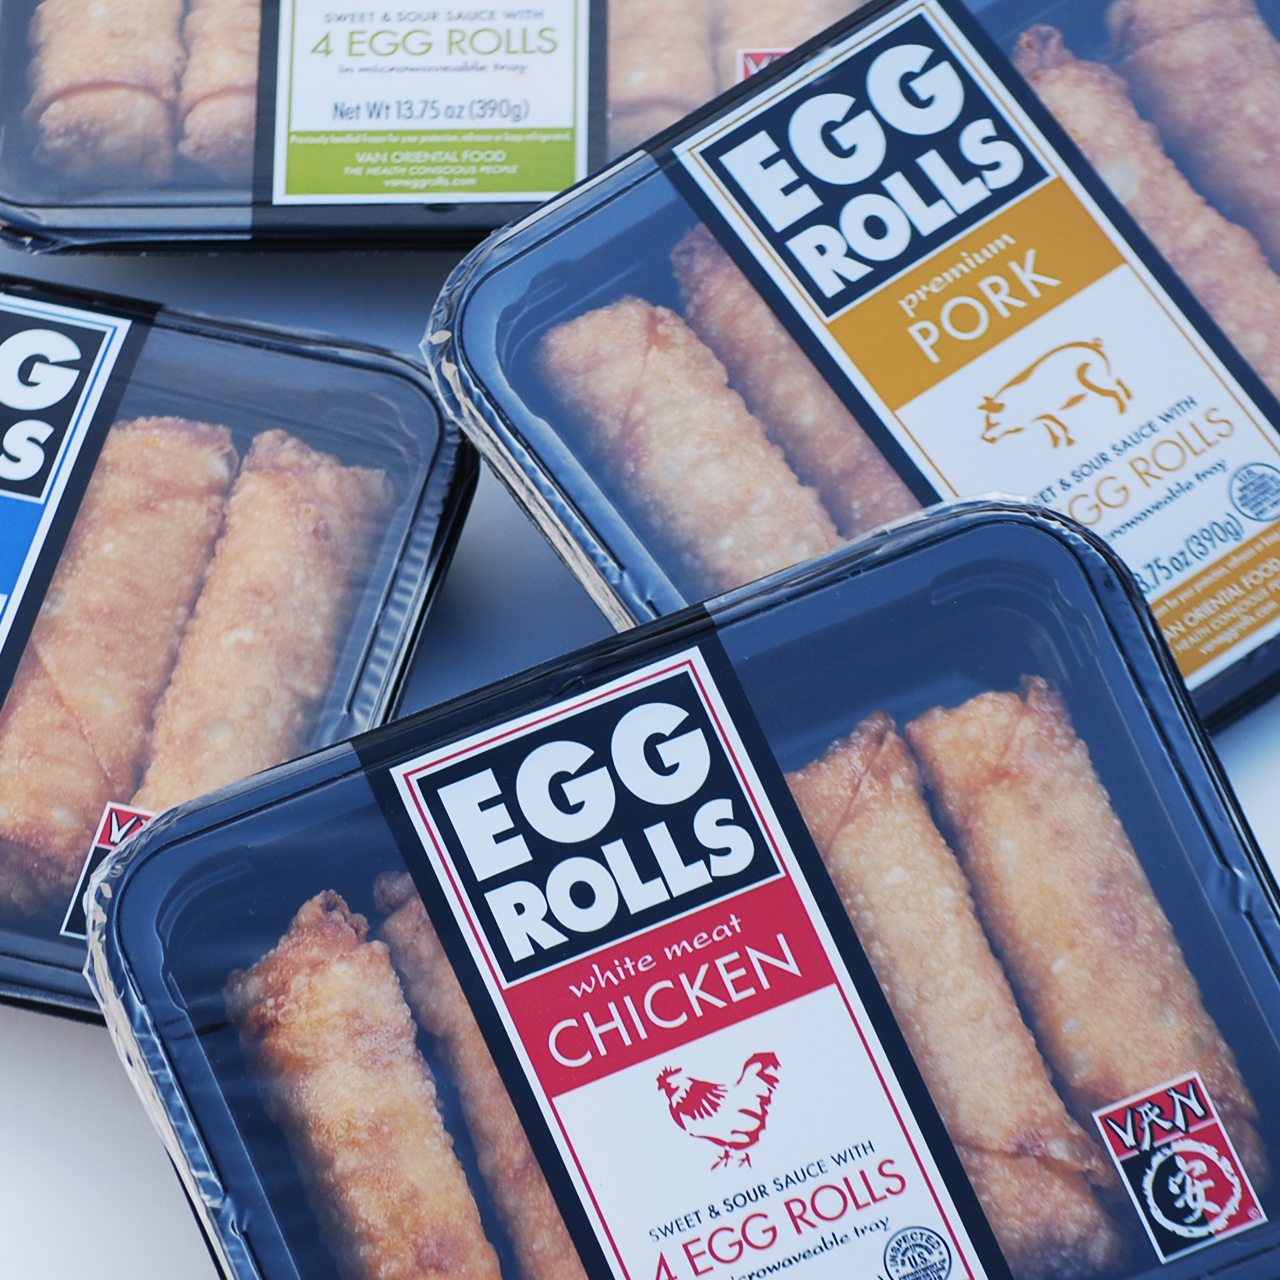 An image of Van's Kitchen fresh eggroll package designs